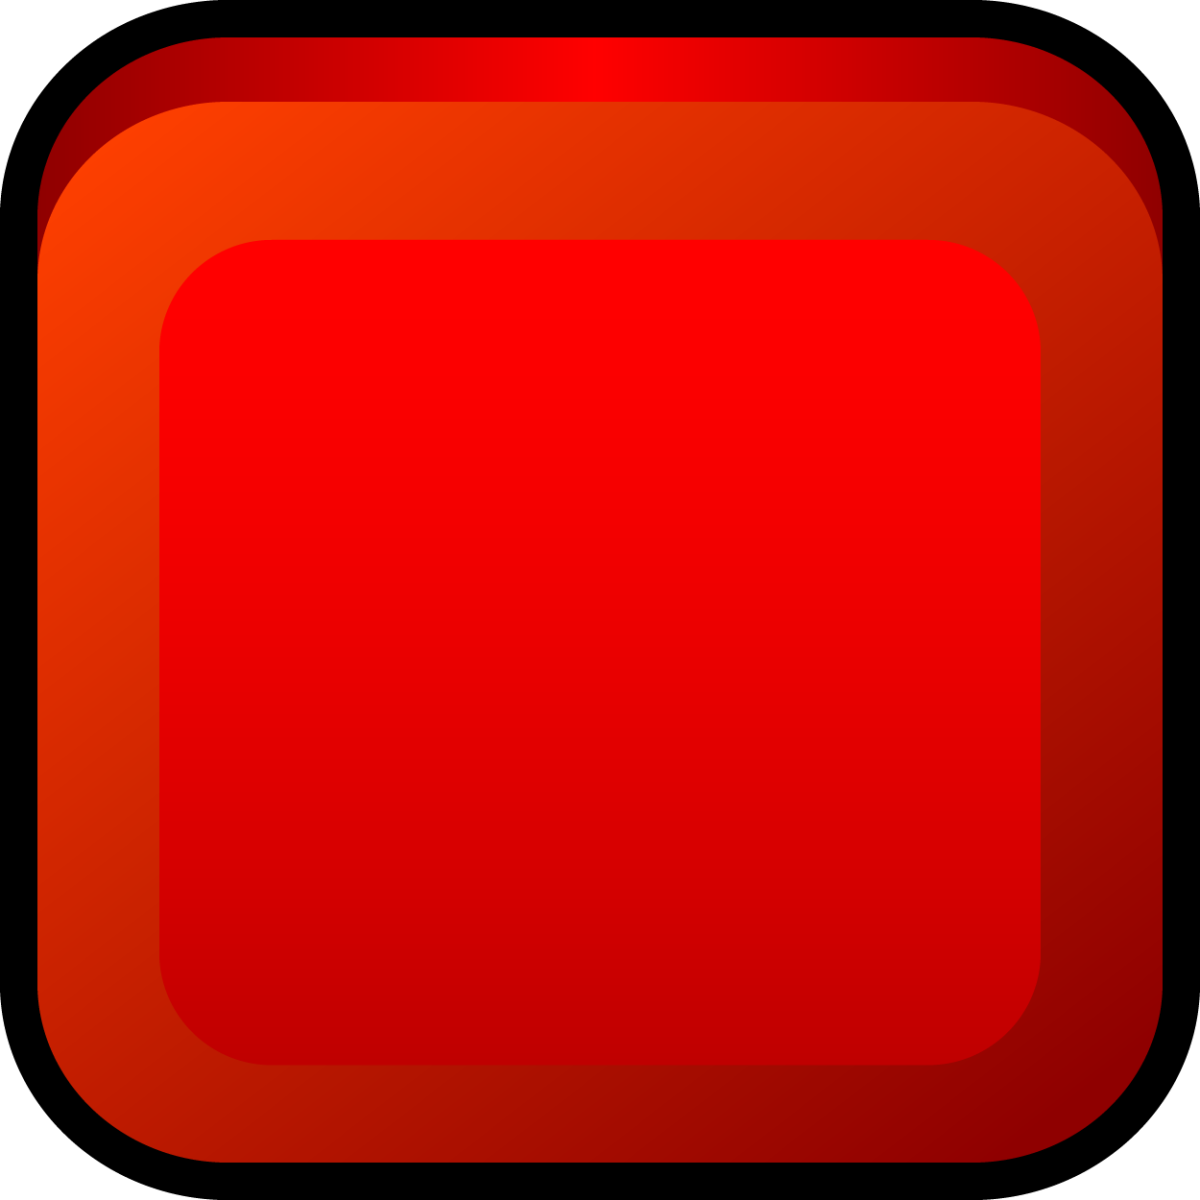 Square icons. Красный квадрат. Кнопка квадратная. Квадрат без фона. Красный квадратик.